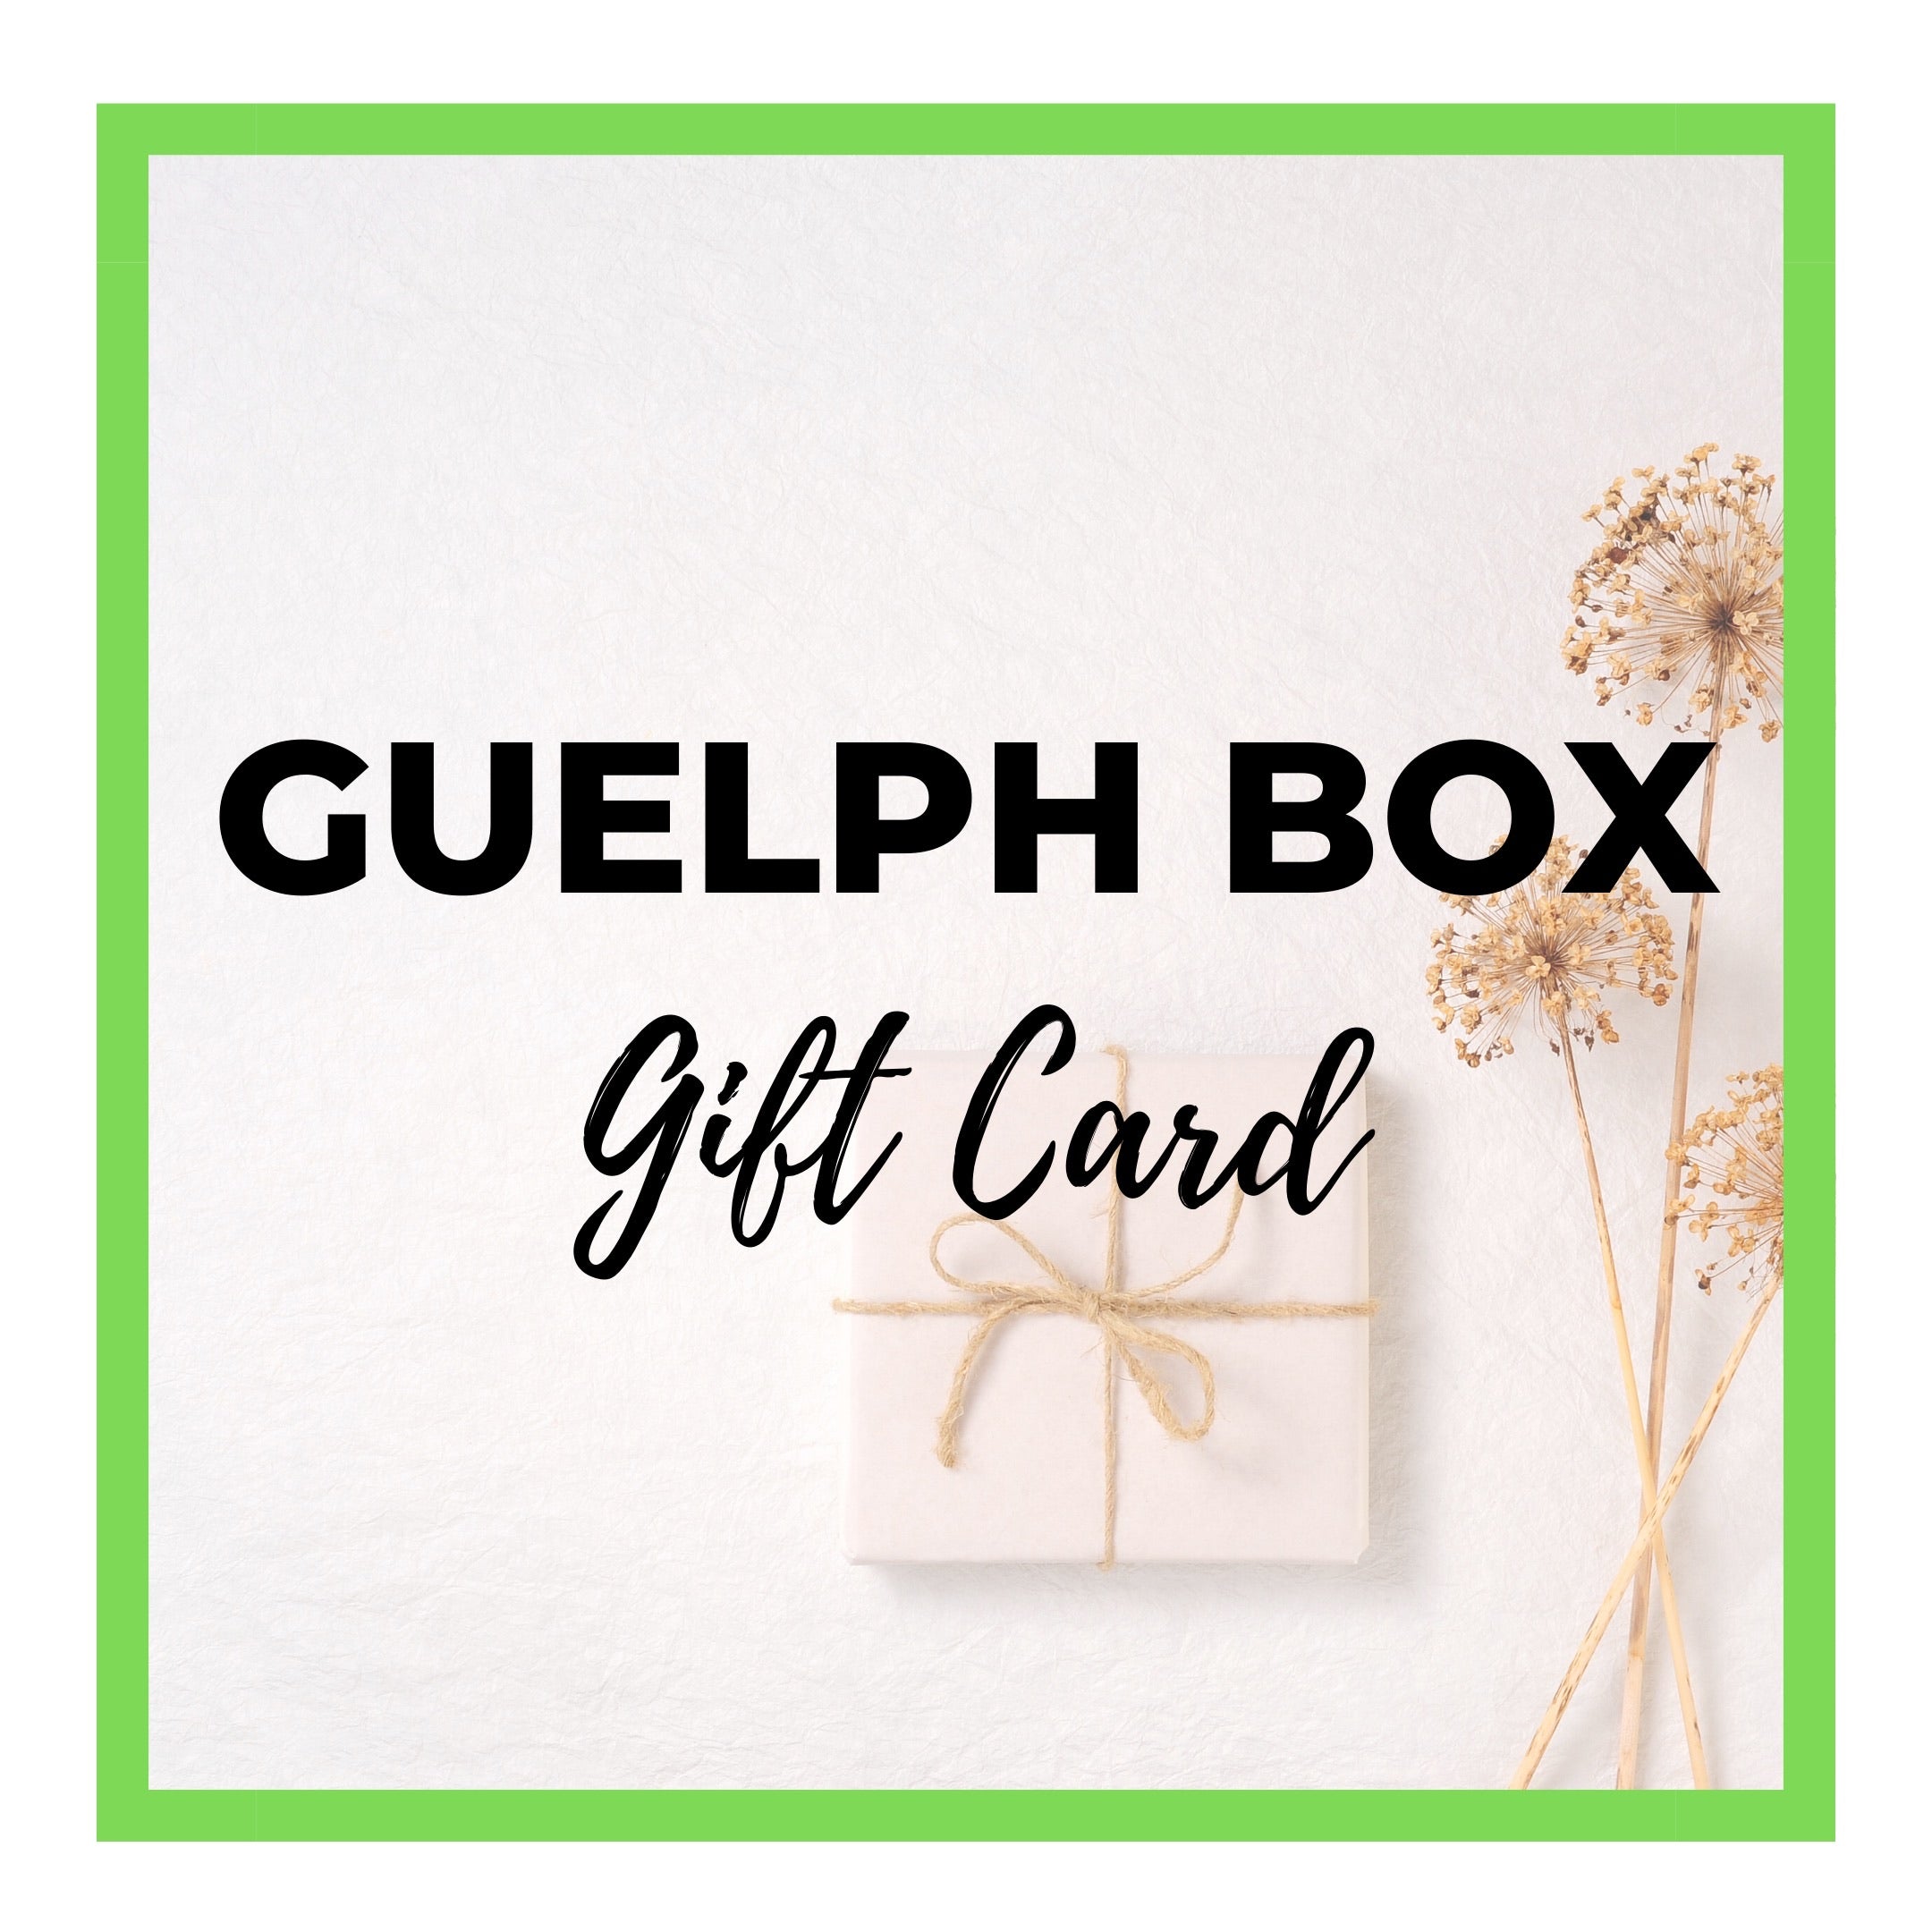 Guelph Box Gift Card